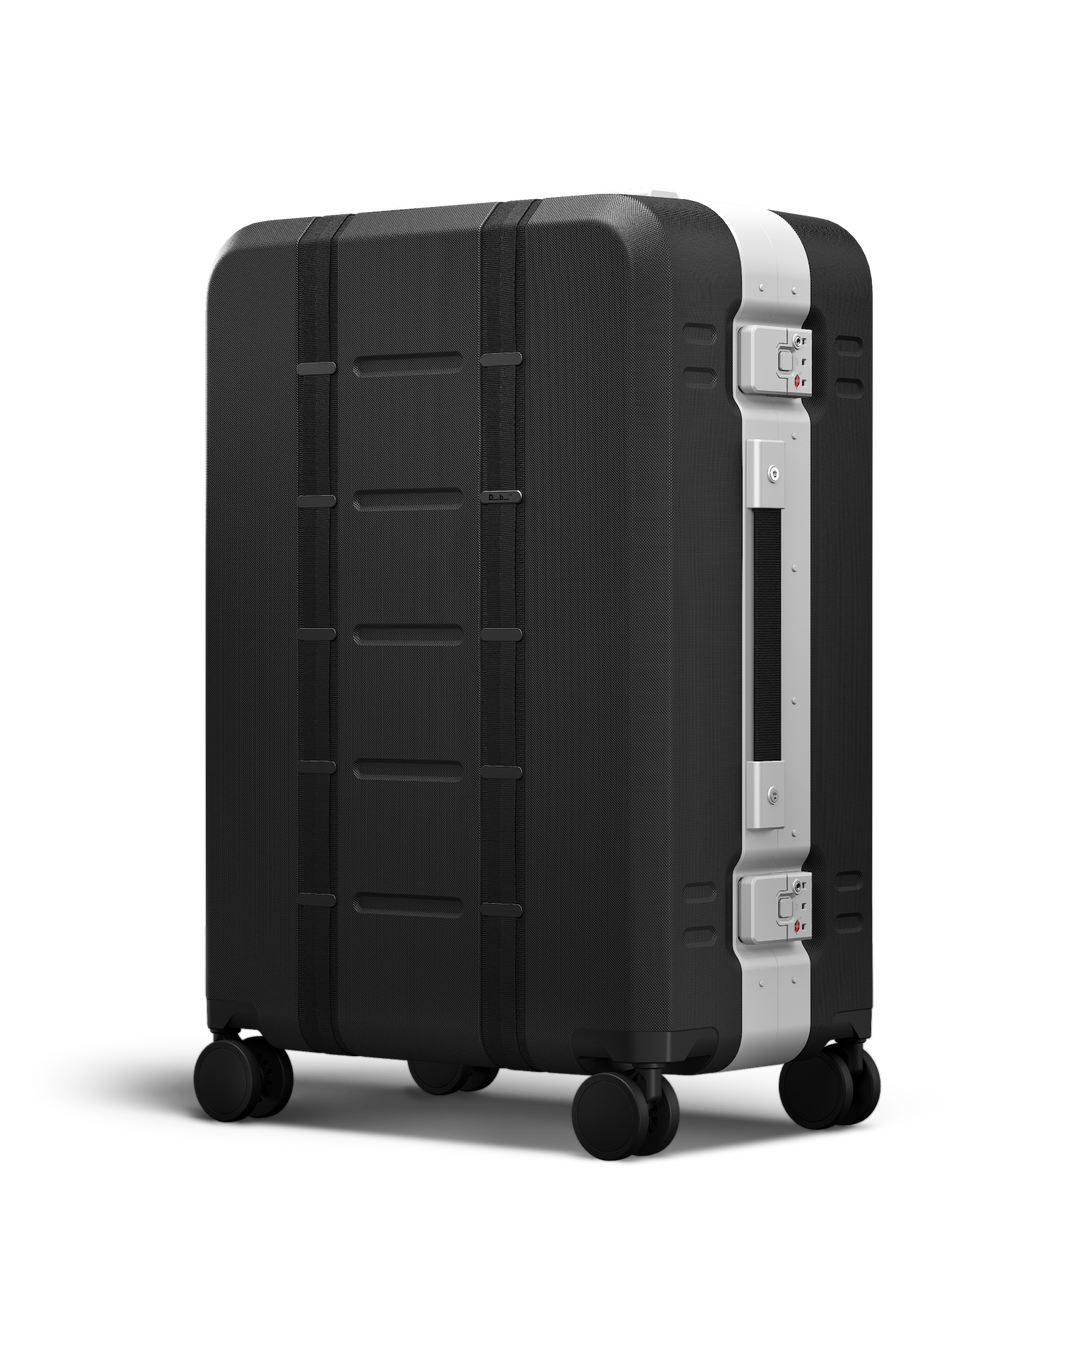 Ramverk Pro Check in luggage medium silver-5.png